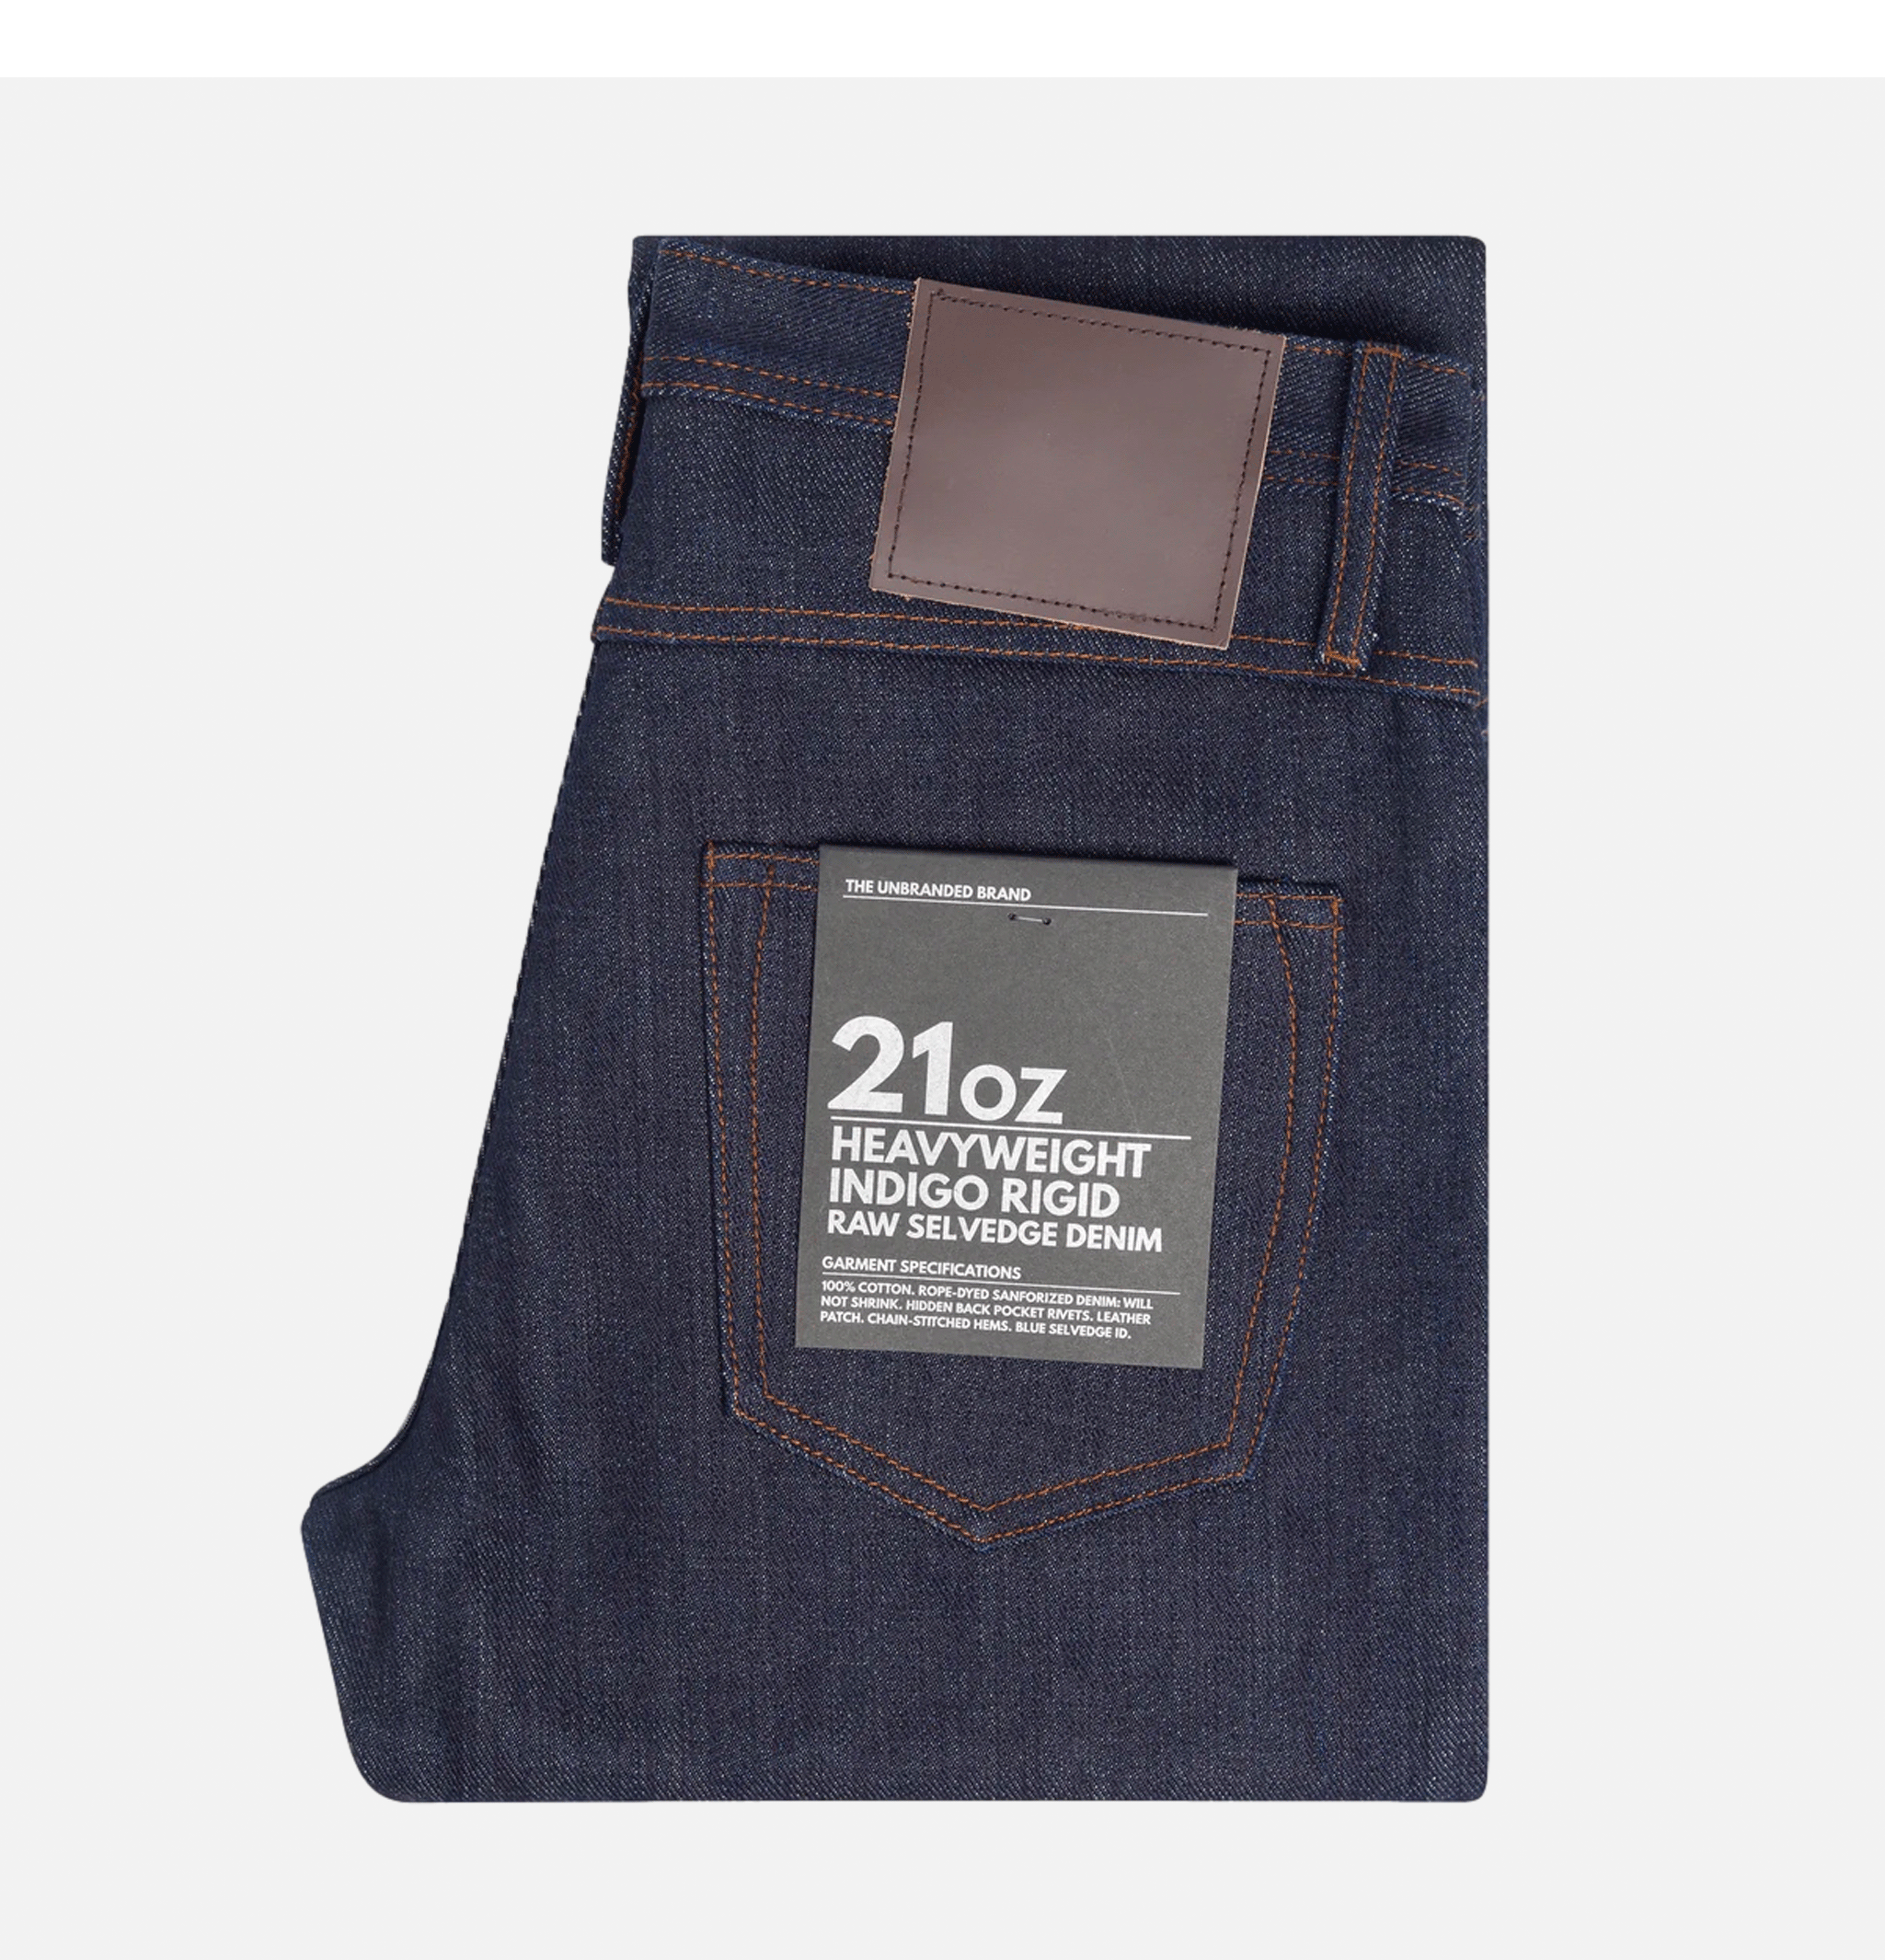 Unbranded Jeans UB 321 21oz